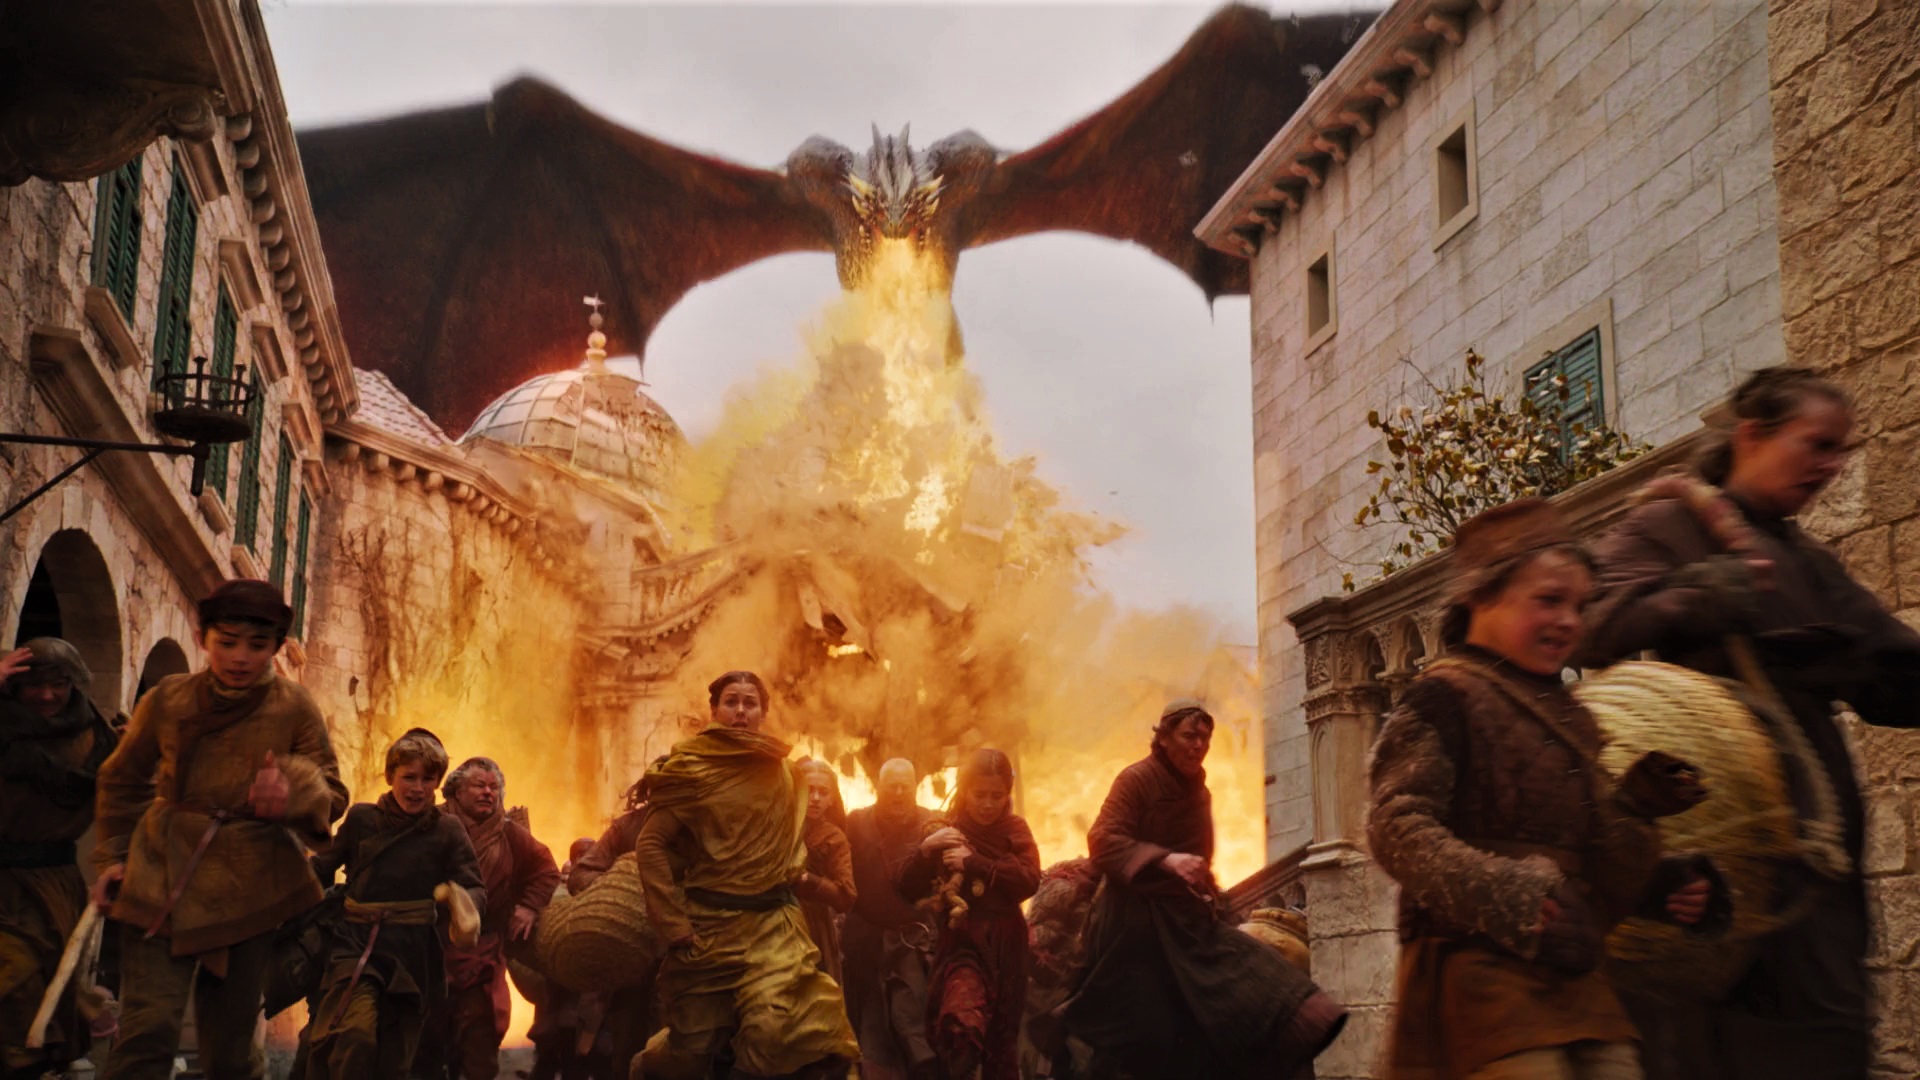 King's Landing Battle 805 Massacre Fire Blood Daenerys Dany Targaryen Drogon Season 8 The Bells